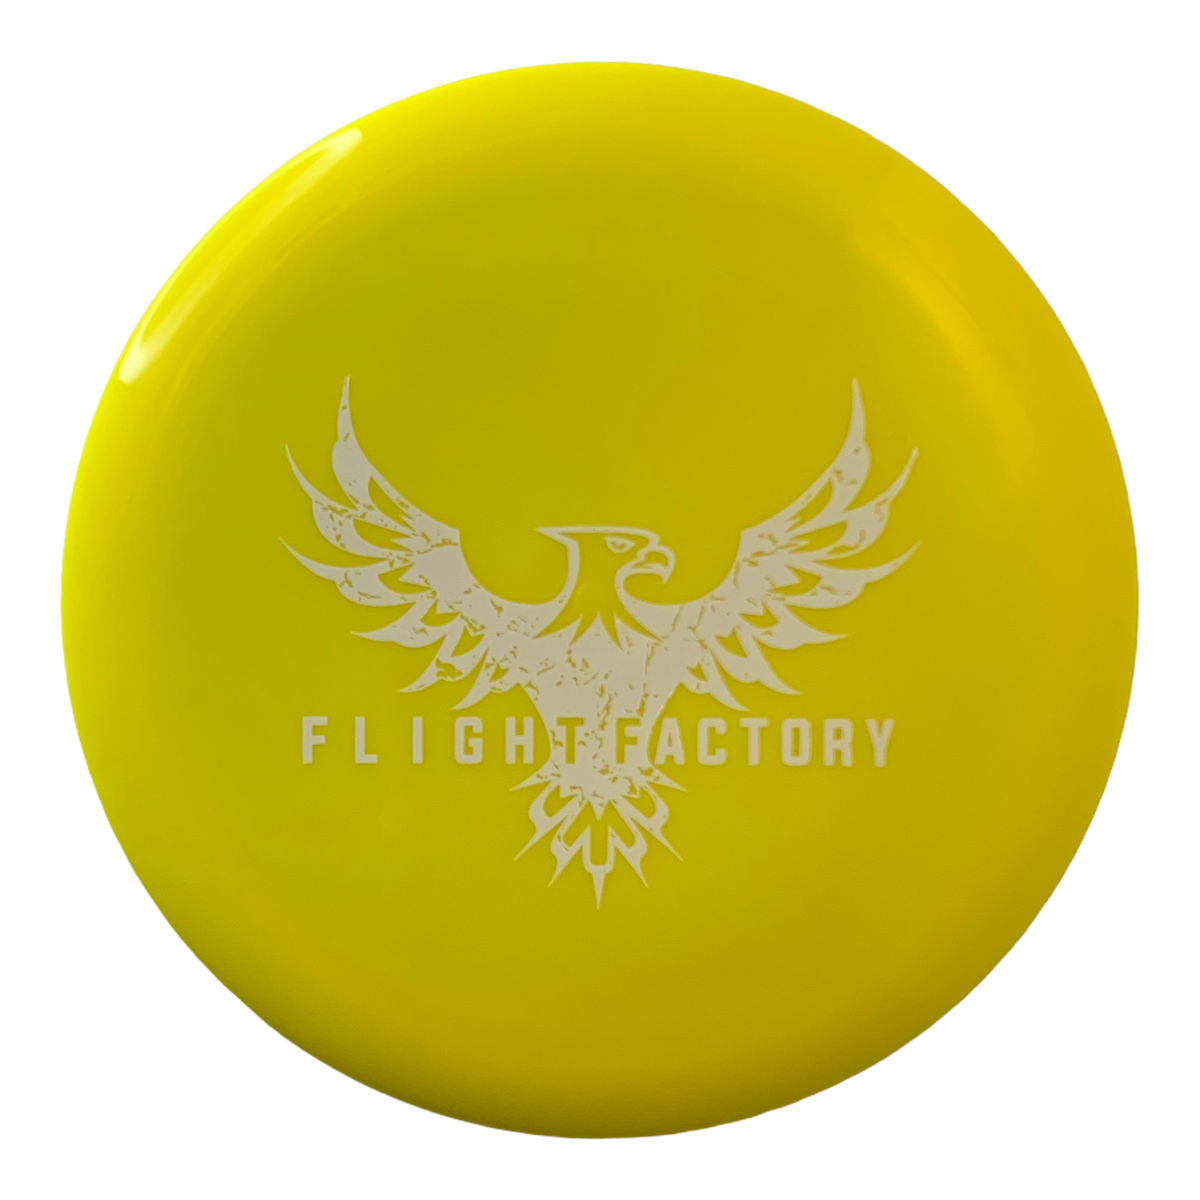 Flight Factory Eagle Fuzion Sergeant